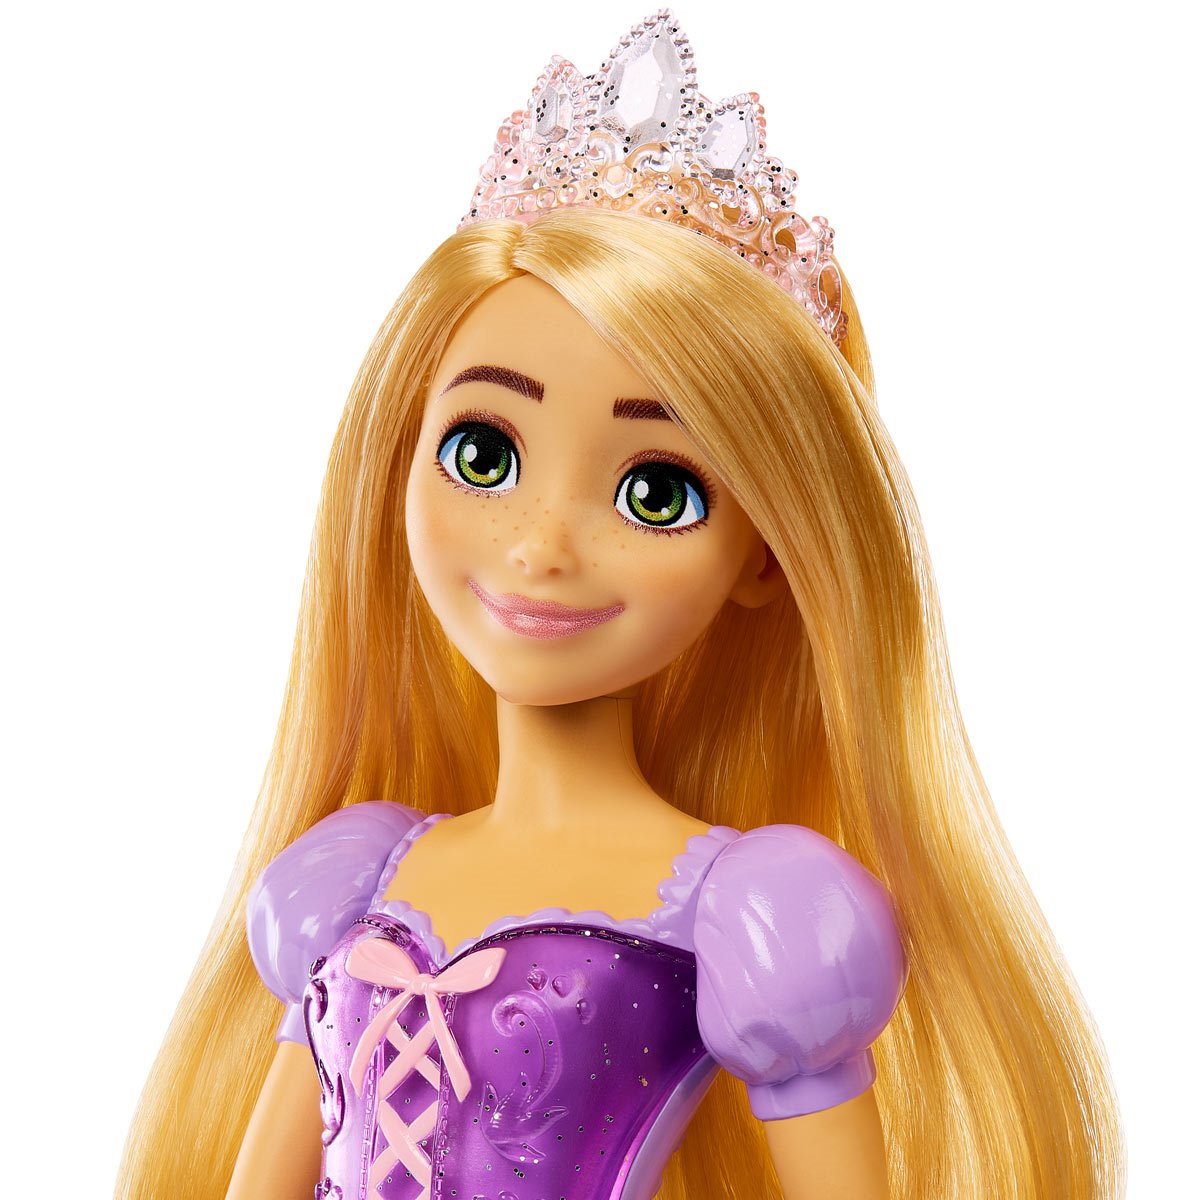 Disney Princess Rapunzel Doll - Entertainment Earth